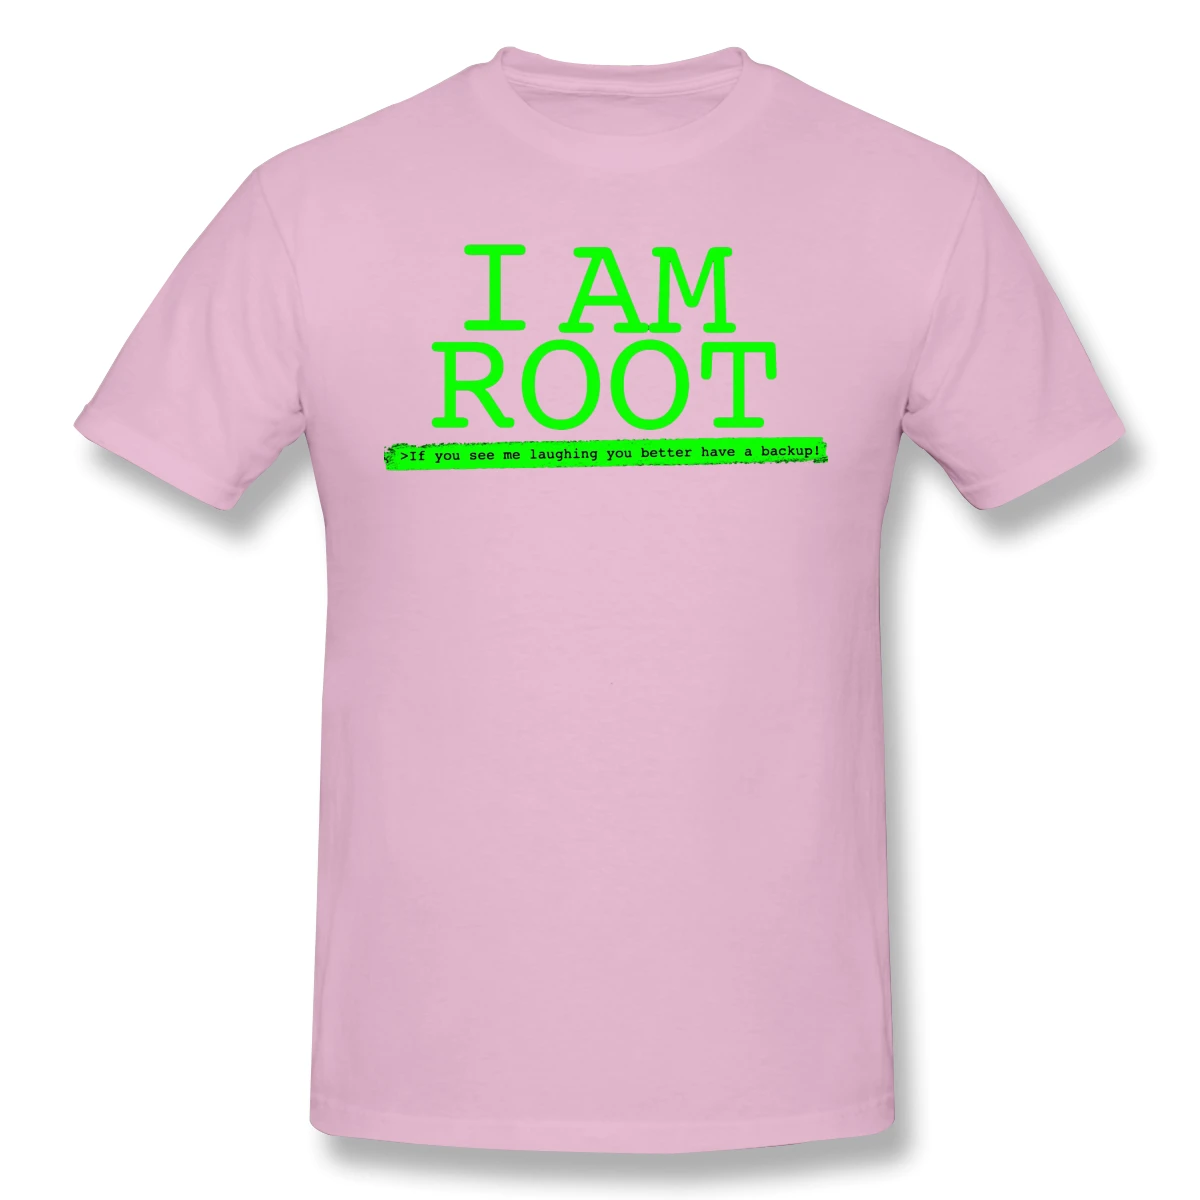 Линукс одежда. I am root. Bash clothes.